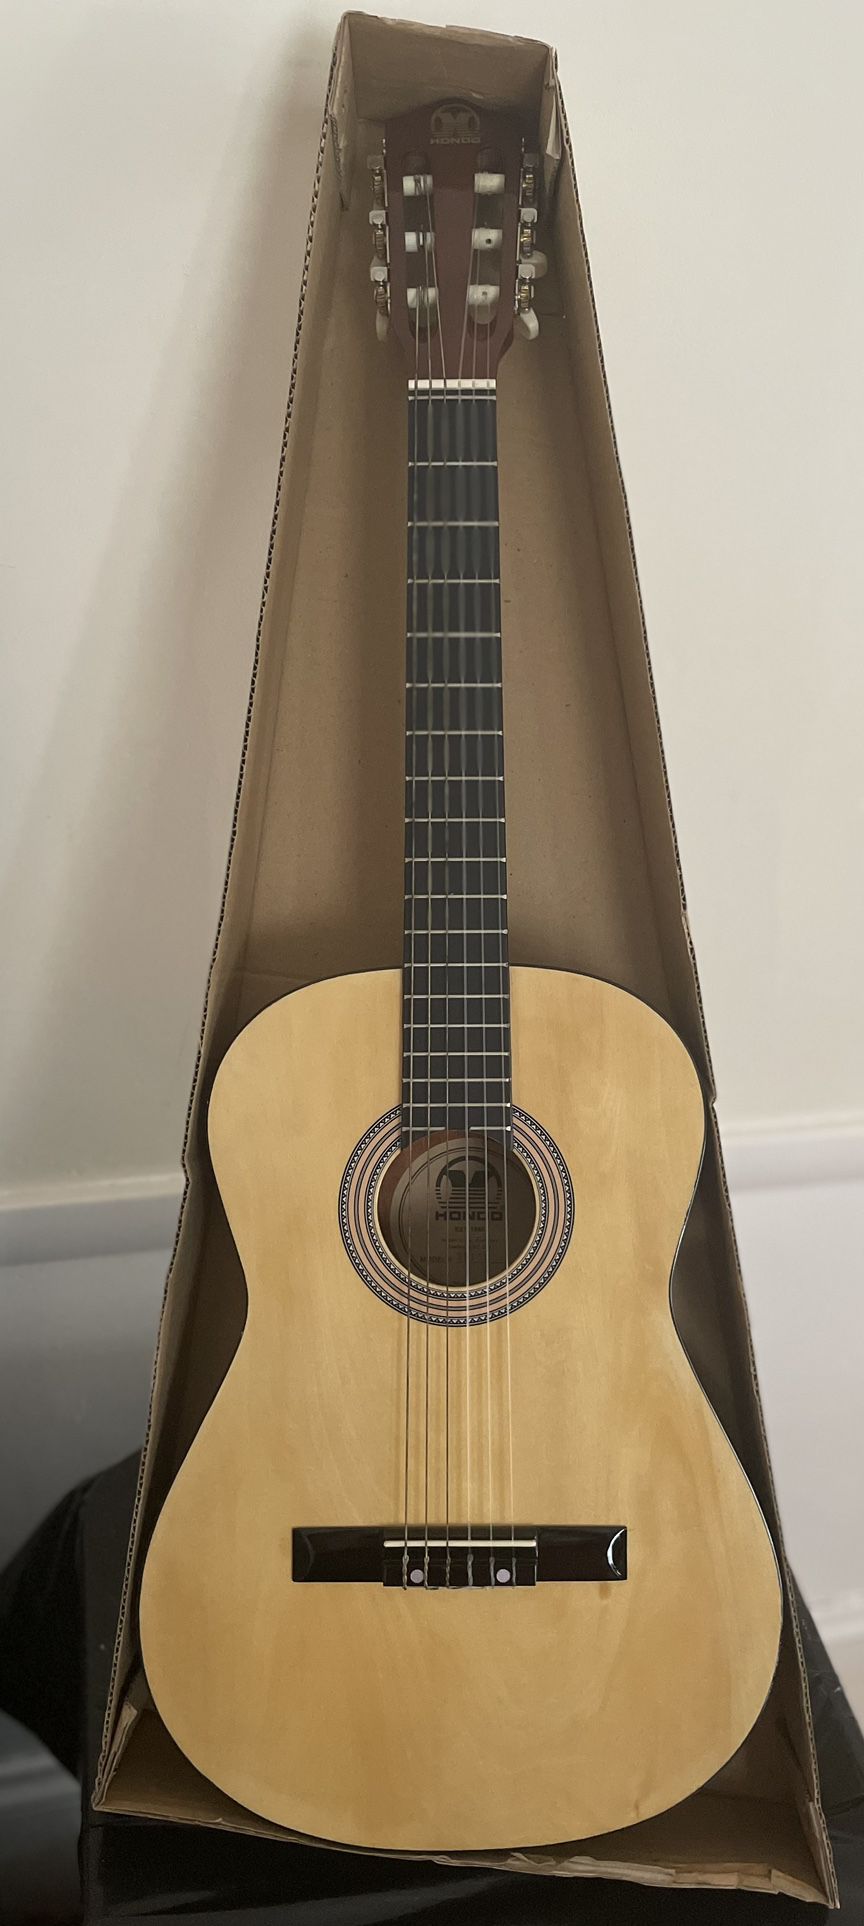 36” Hondo Acoustic Guitar  Open box/New. $150